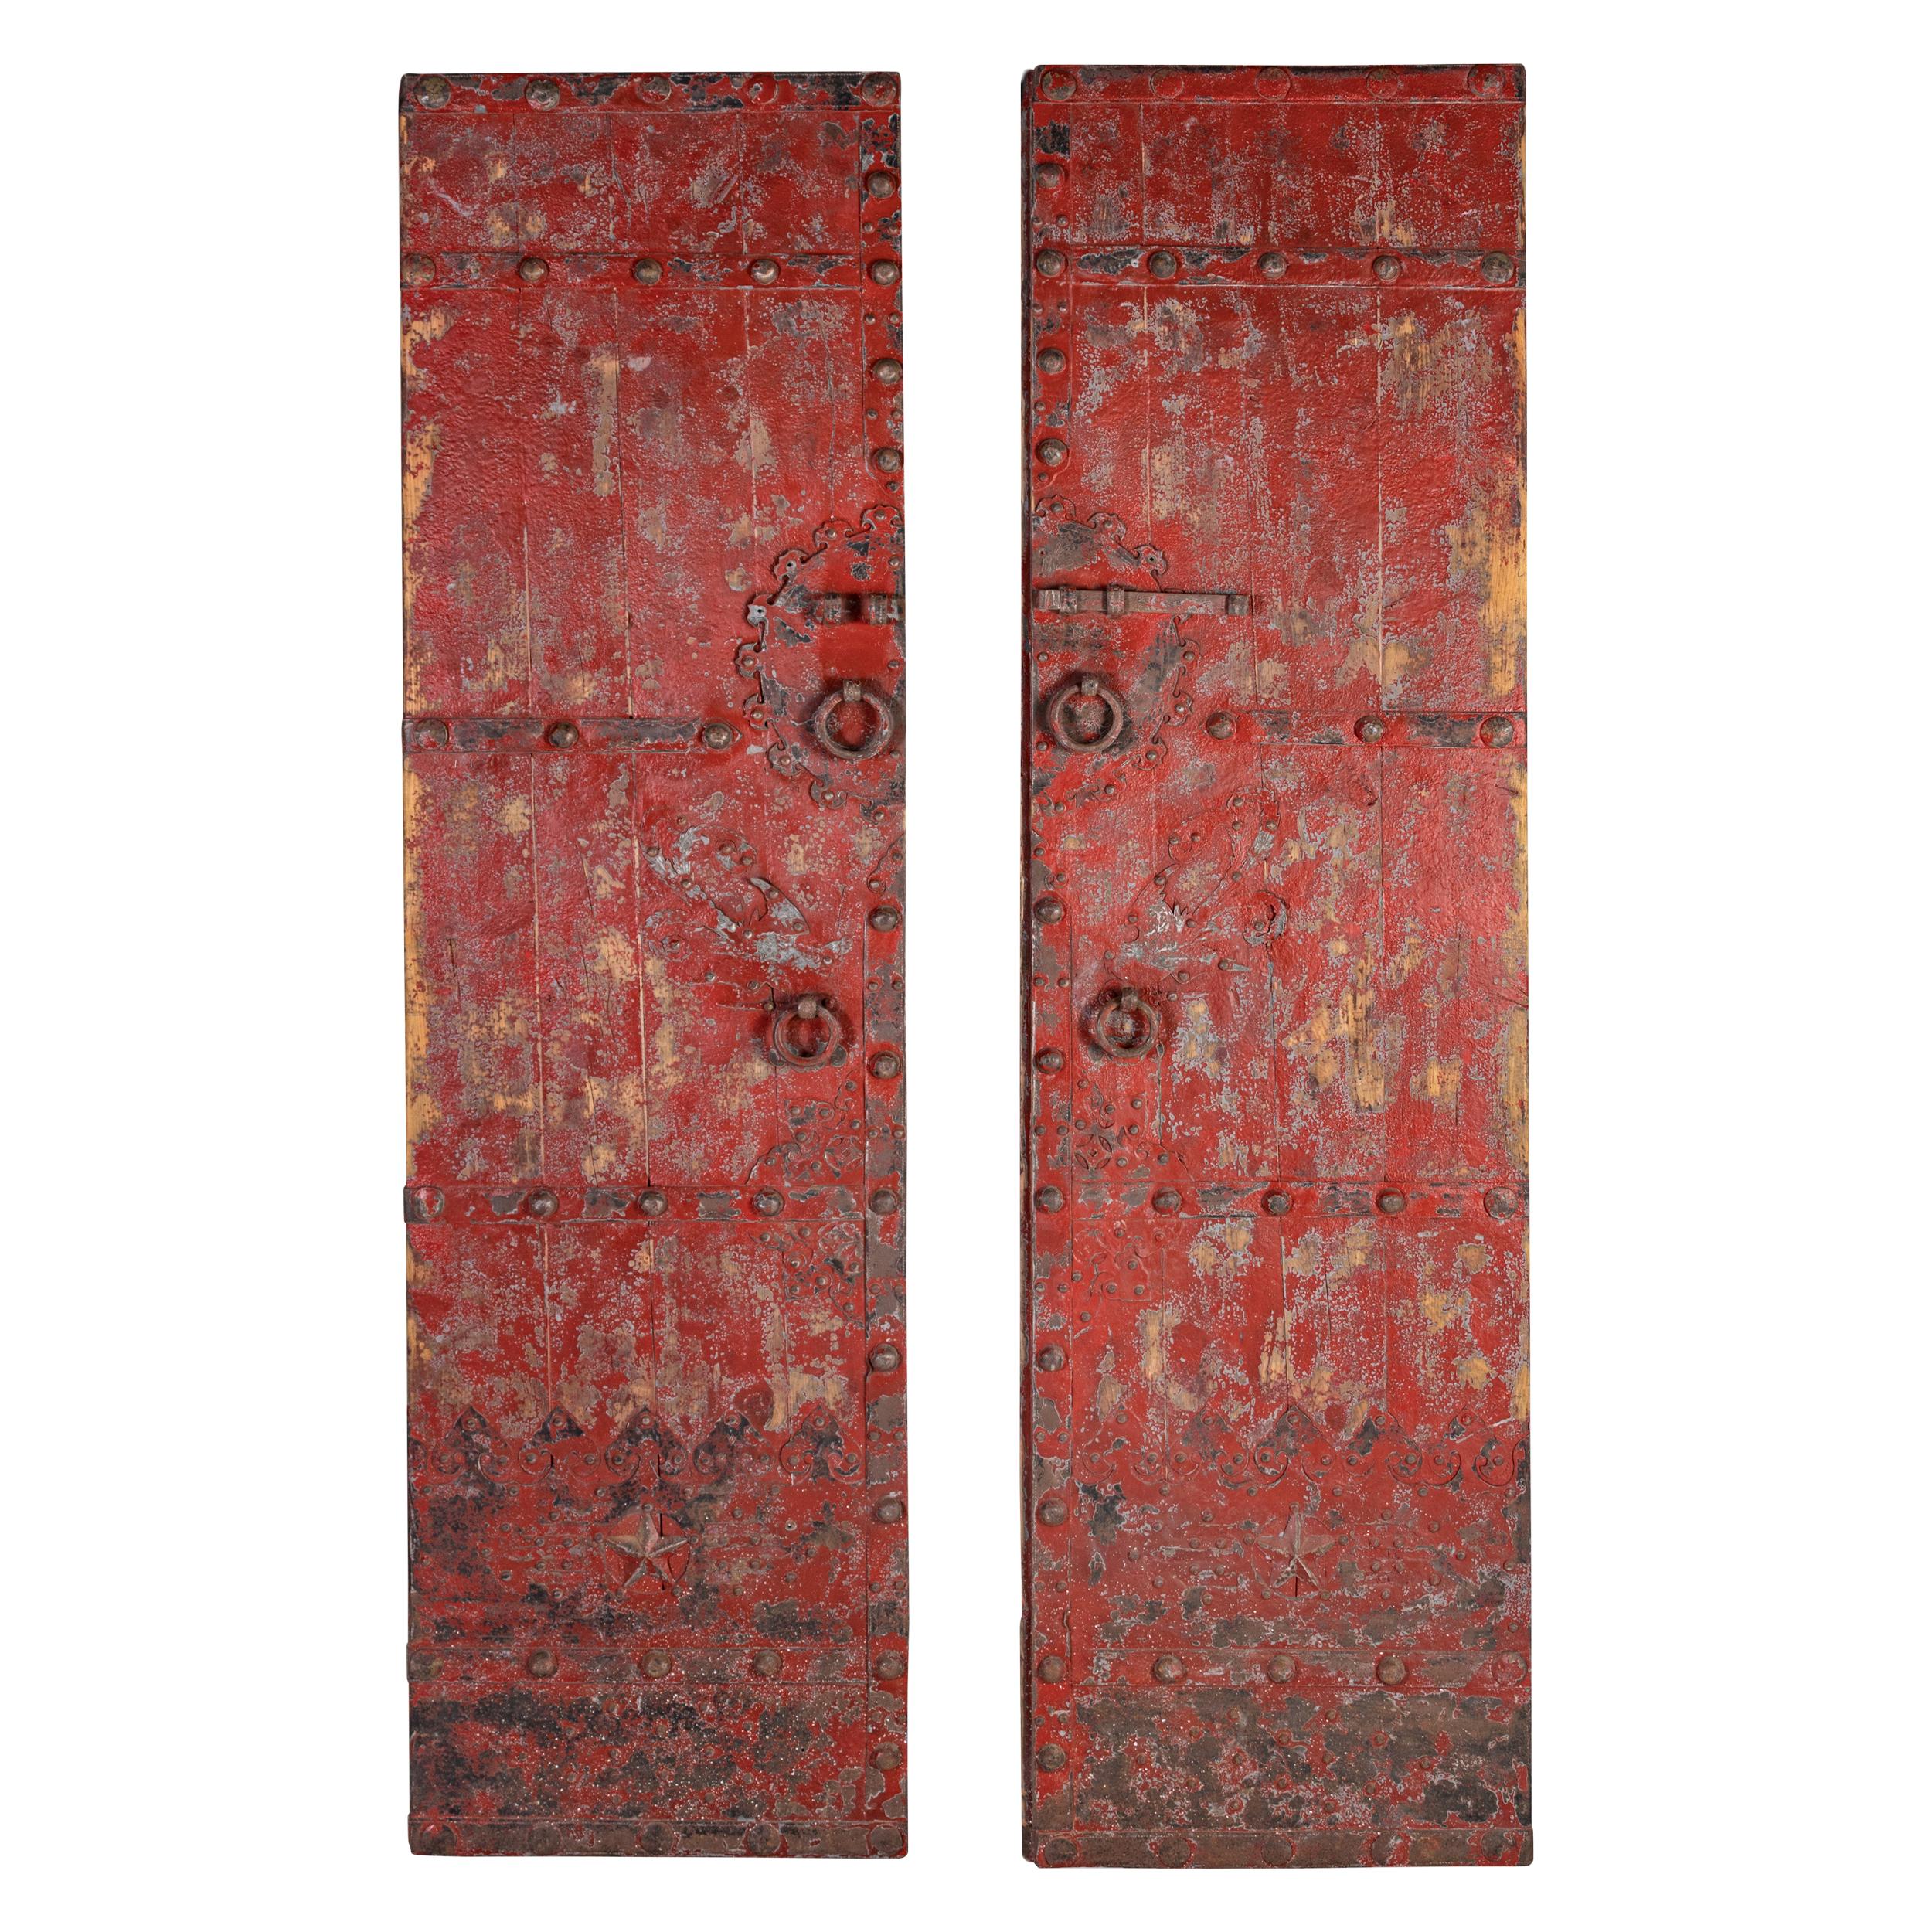 Pair of Red Patina South Asian Doors Repurposed as Wall Decor 